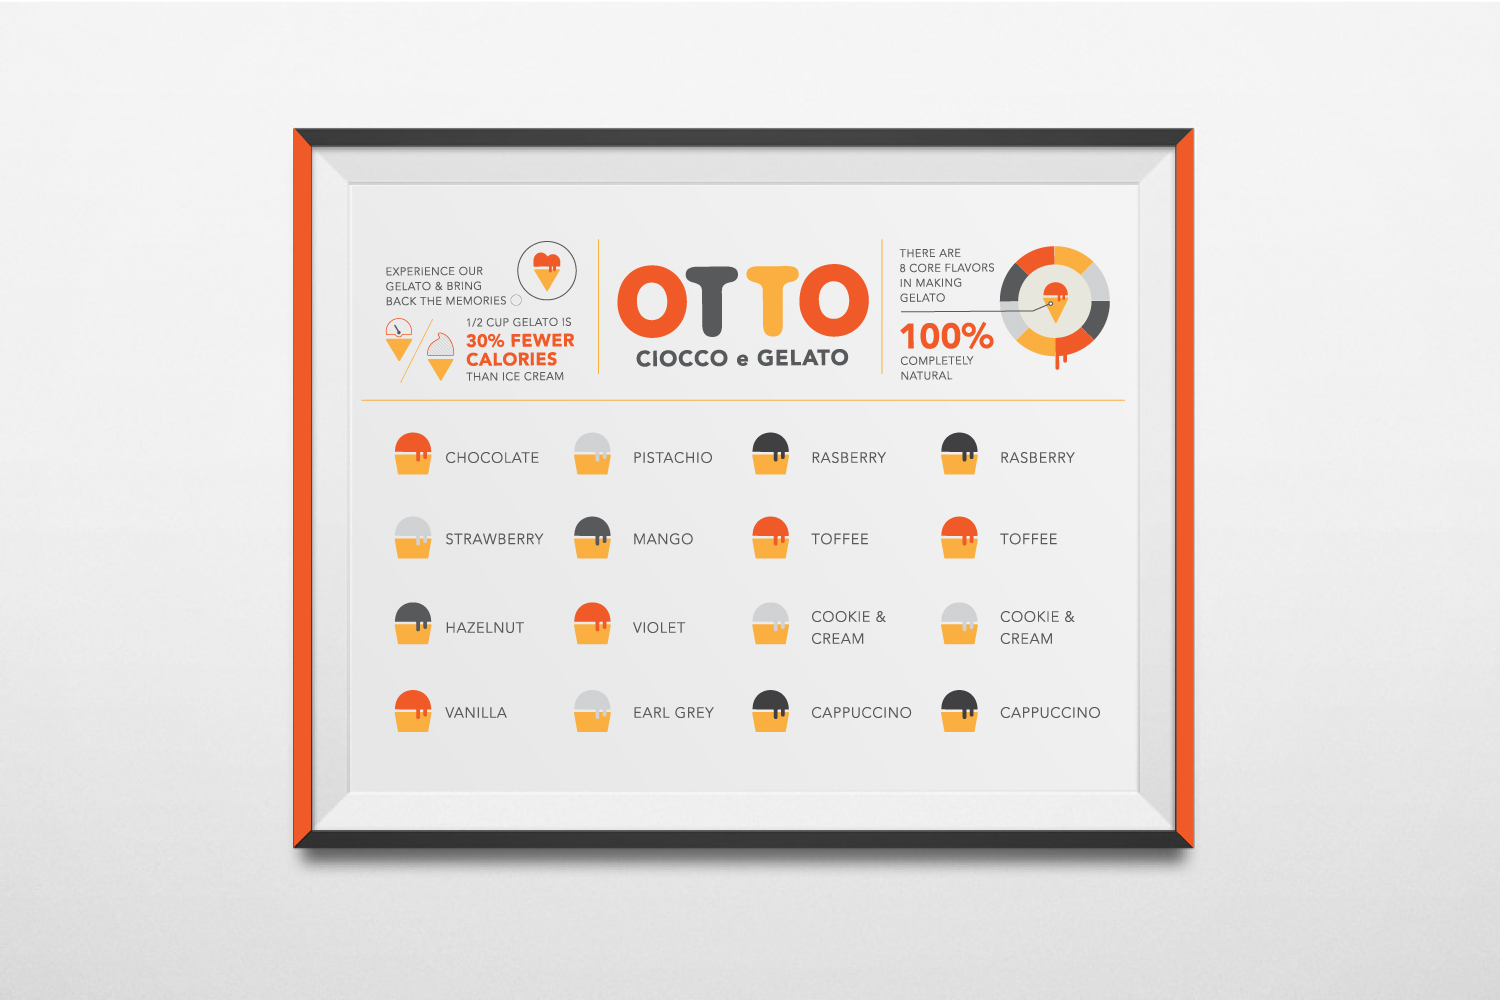 Otto_menu.jpg